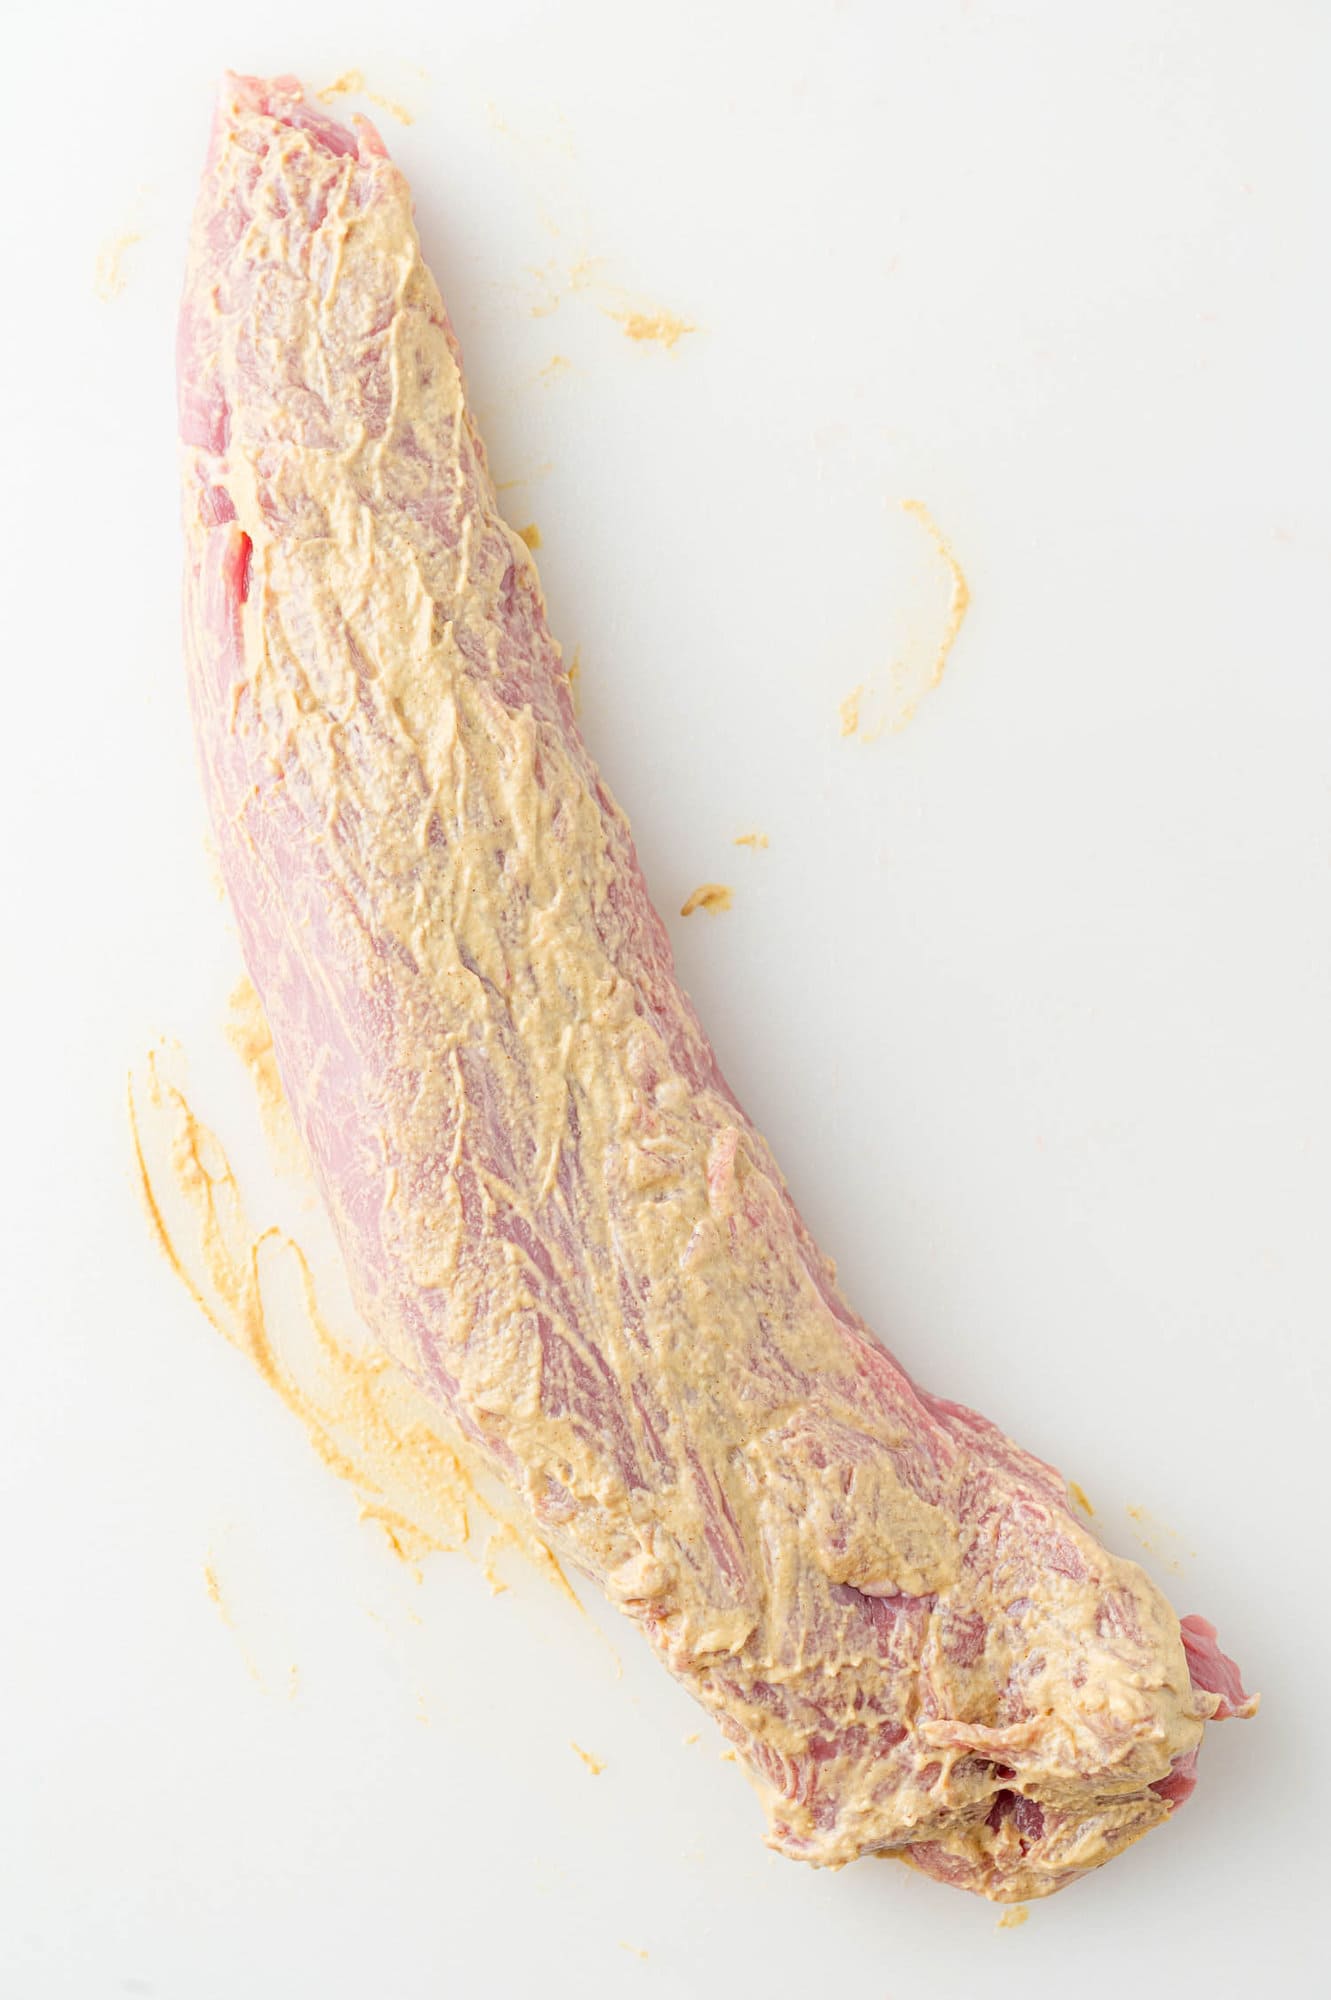 Pork tenderloin rubbed with dijon mustard.